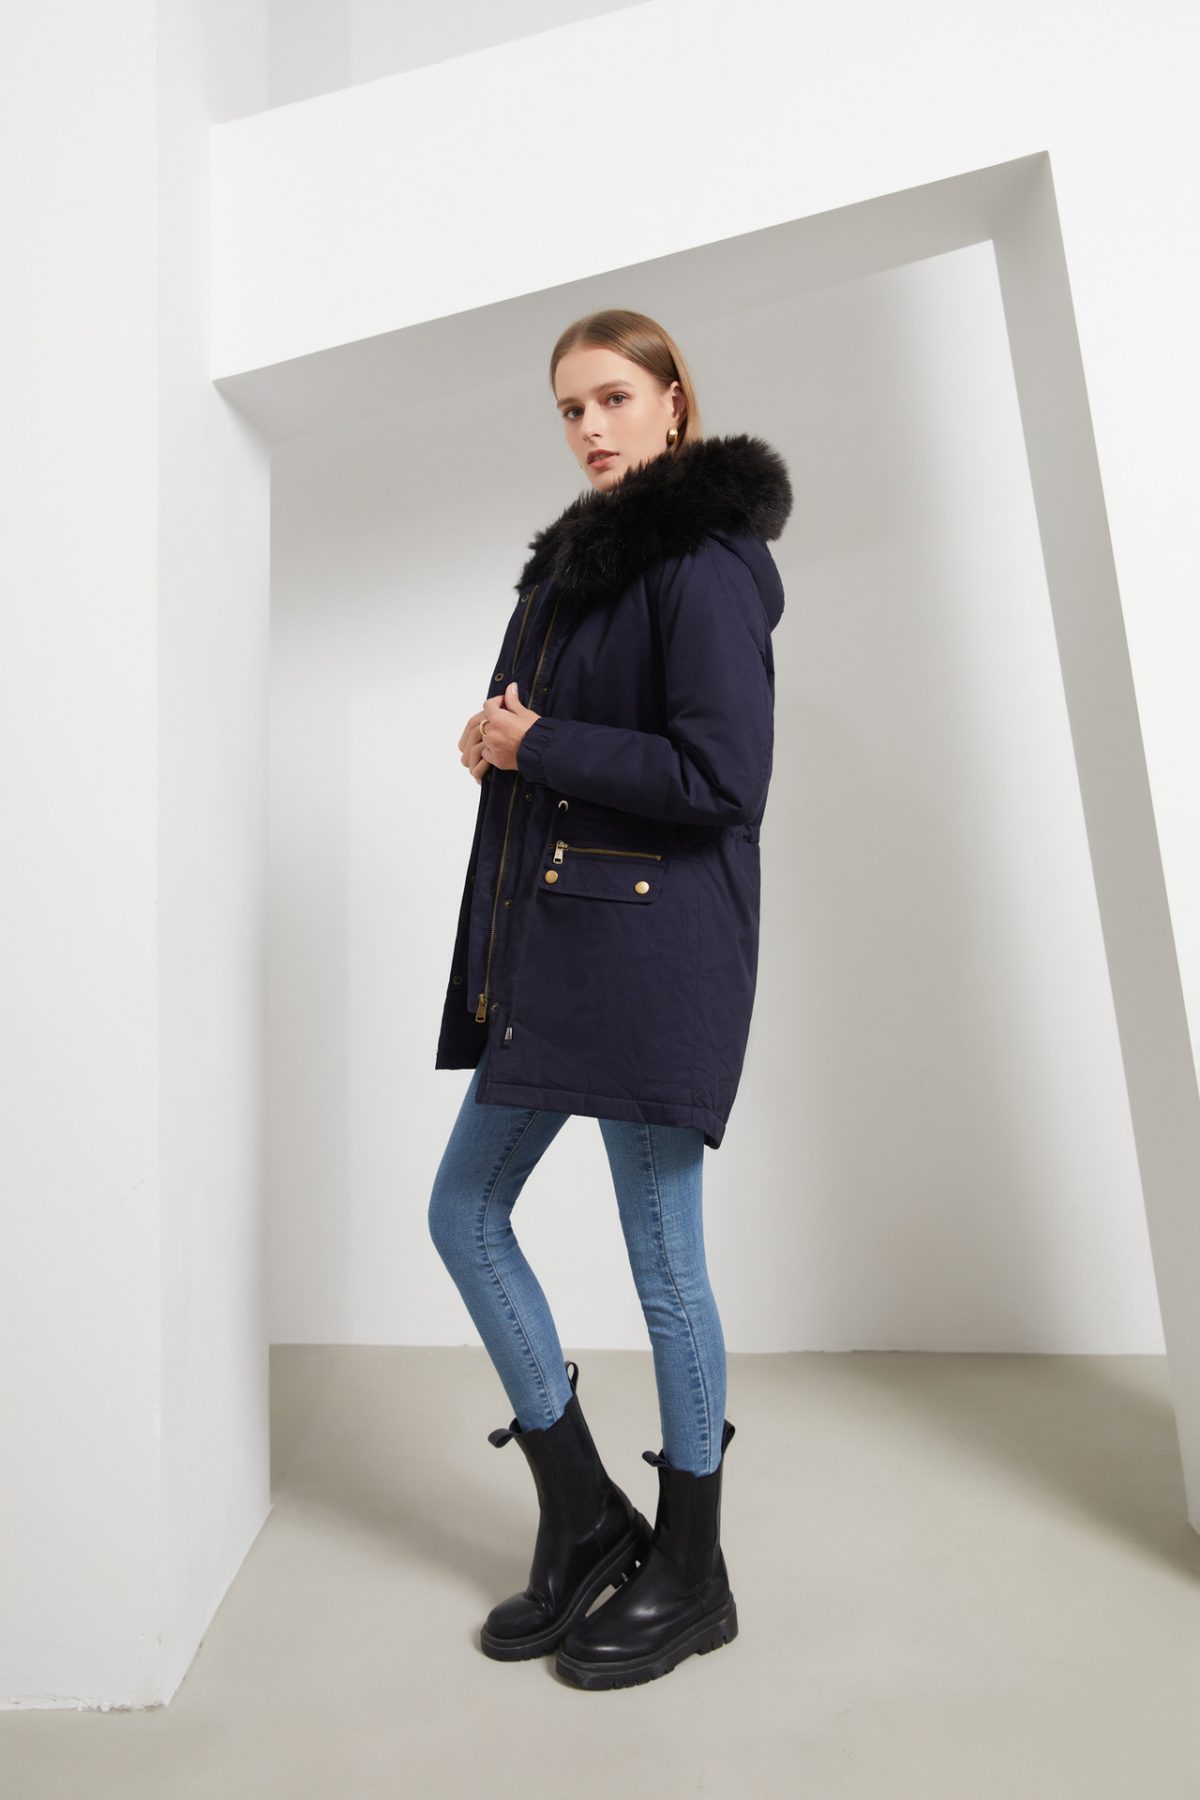 Autumn Winter Fleece Lined with Fur Collar Hooded Warm Coat Plus Size - Coats & Jackets - Uniqistic.com